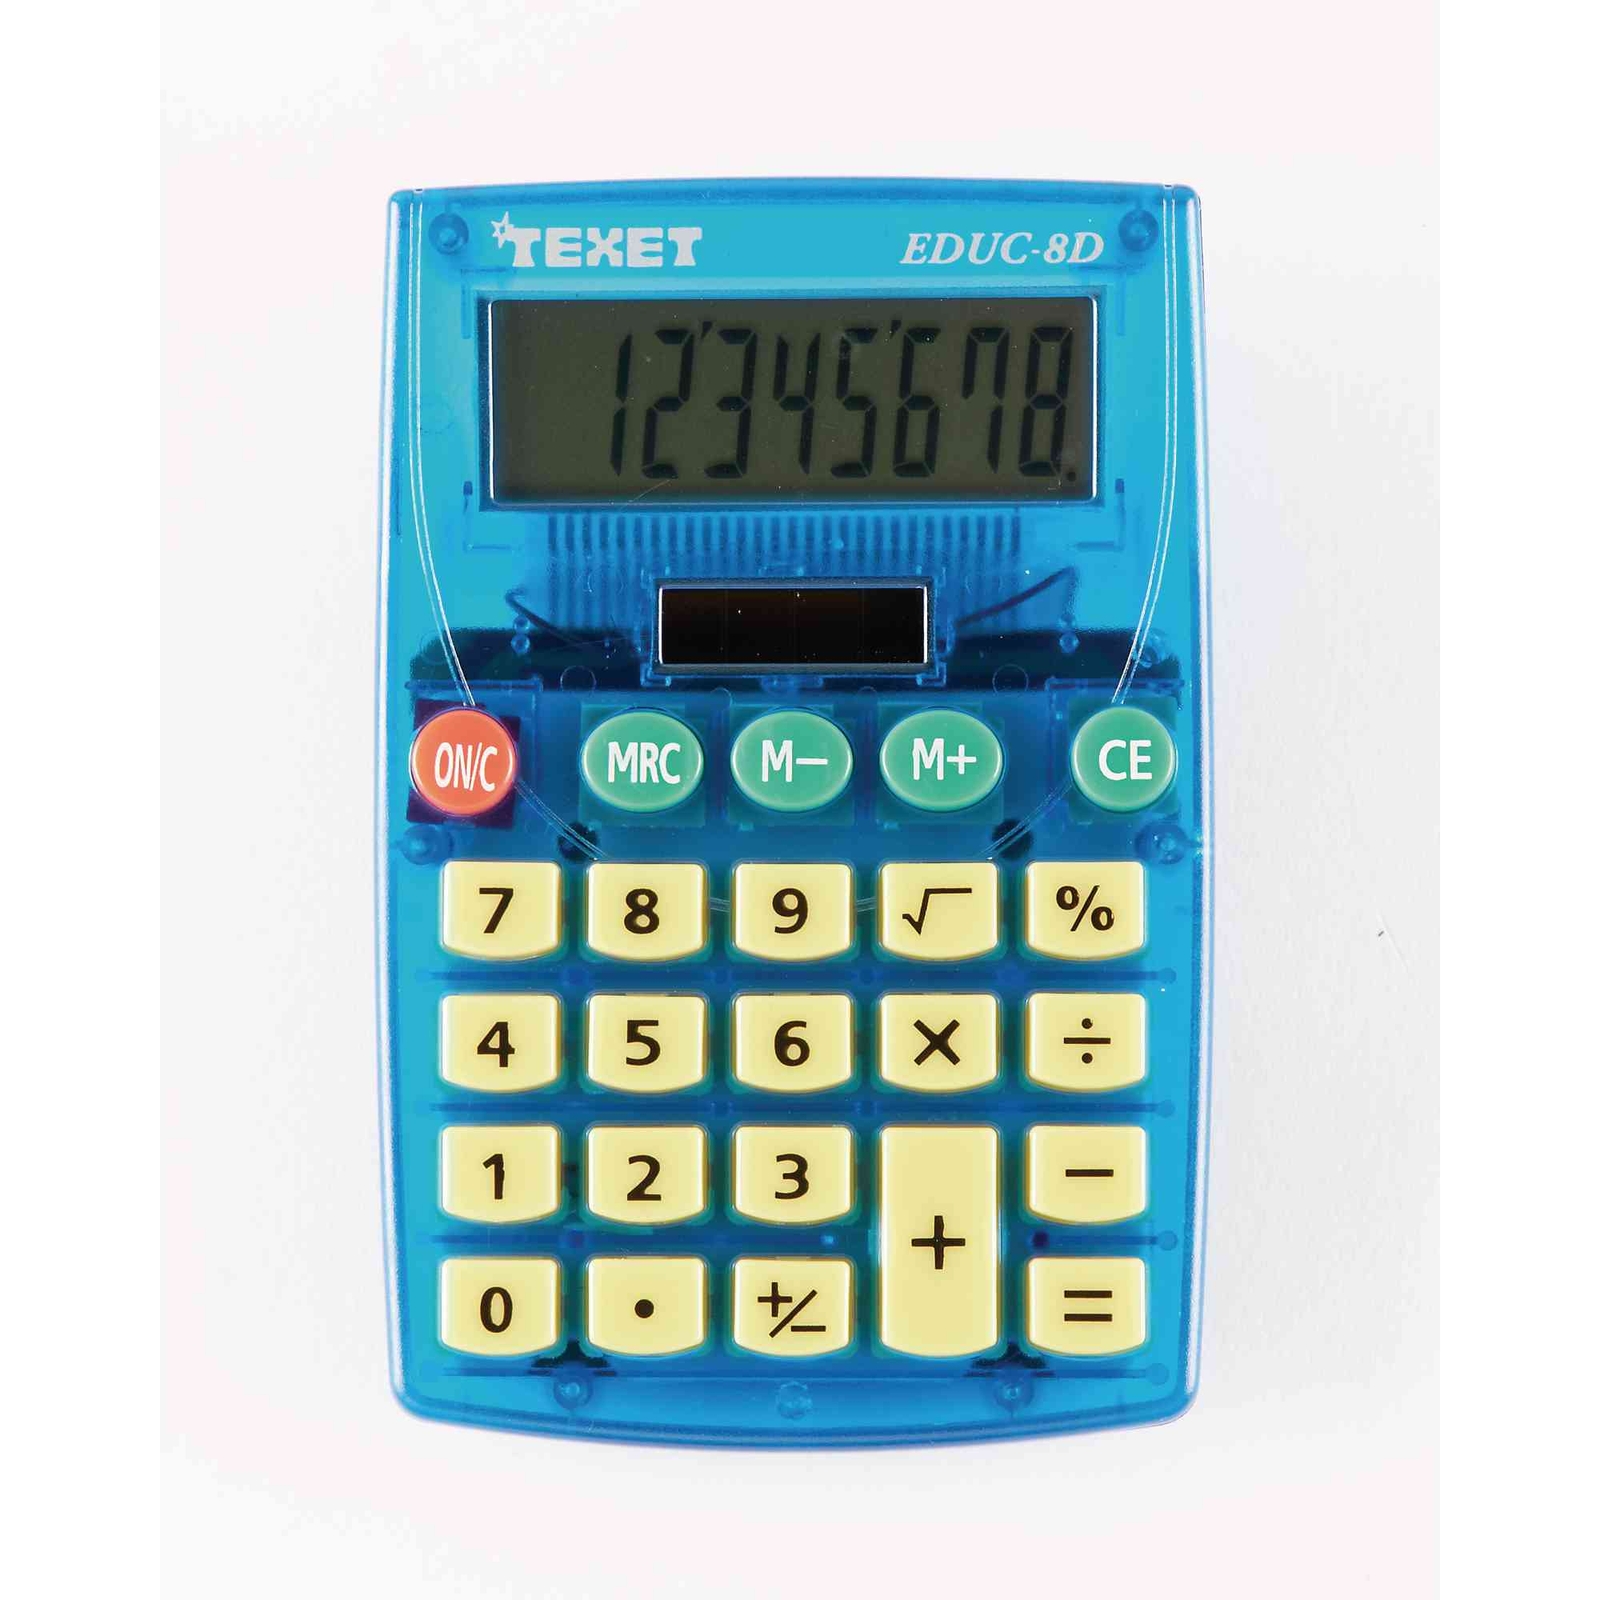 Texet EDUC-8D Calculator - Pack of 30